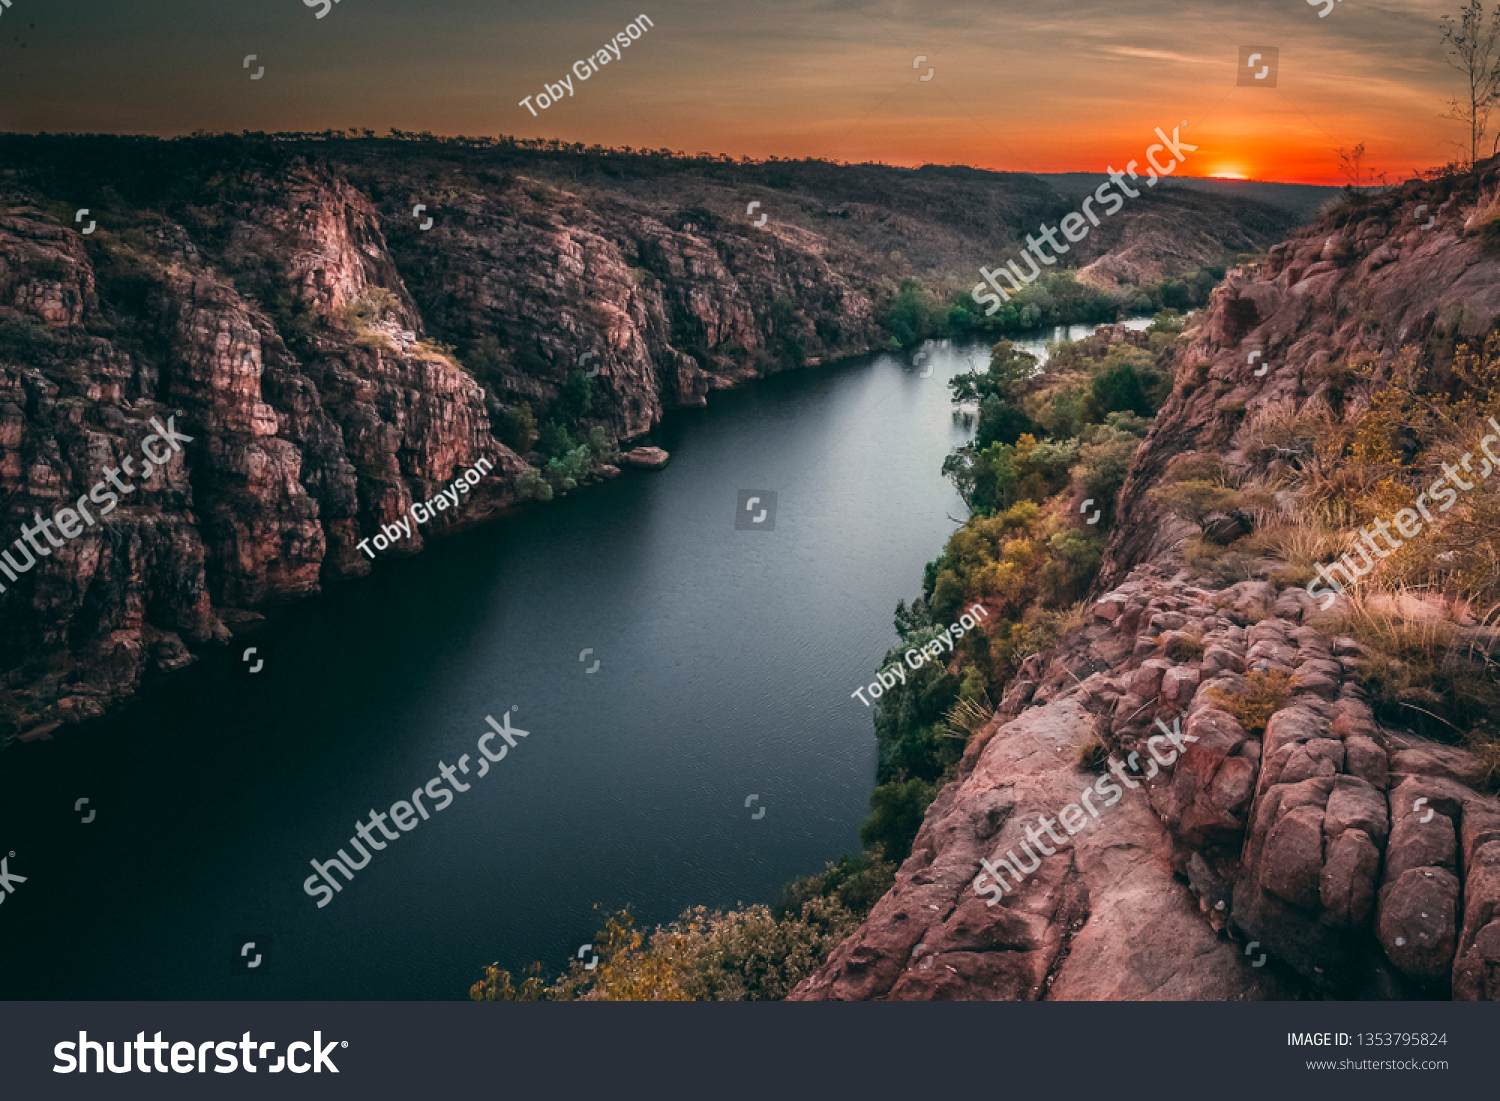 Sunrise at Nitmiluk gorge, Katherine, Northern Territory Australia #1353795824